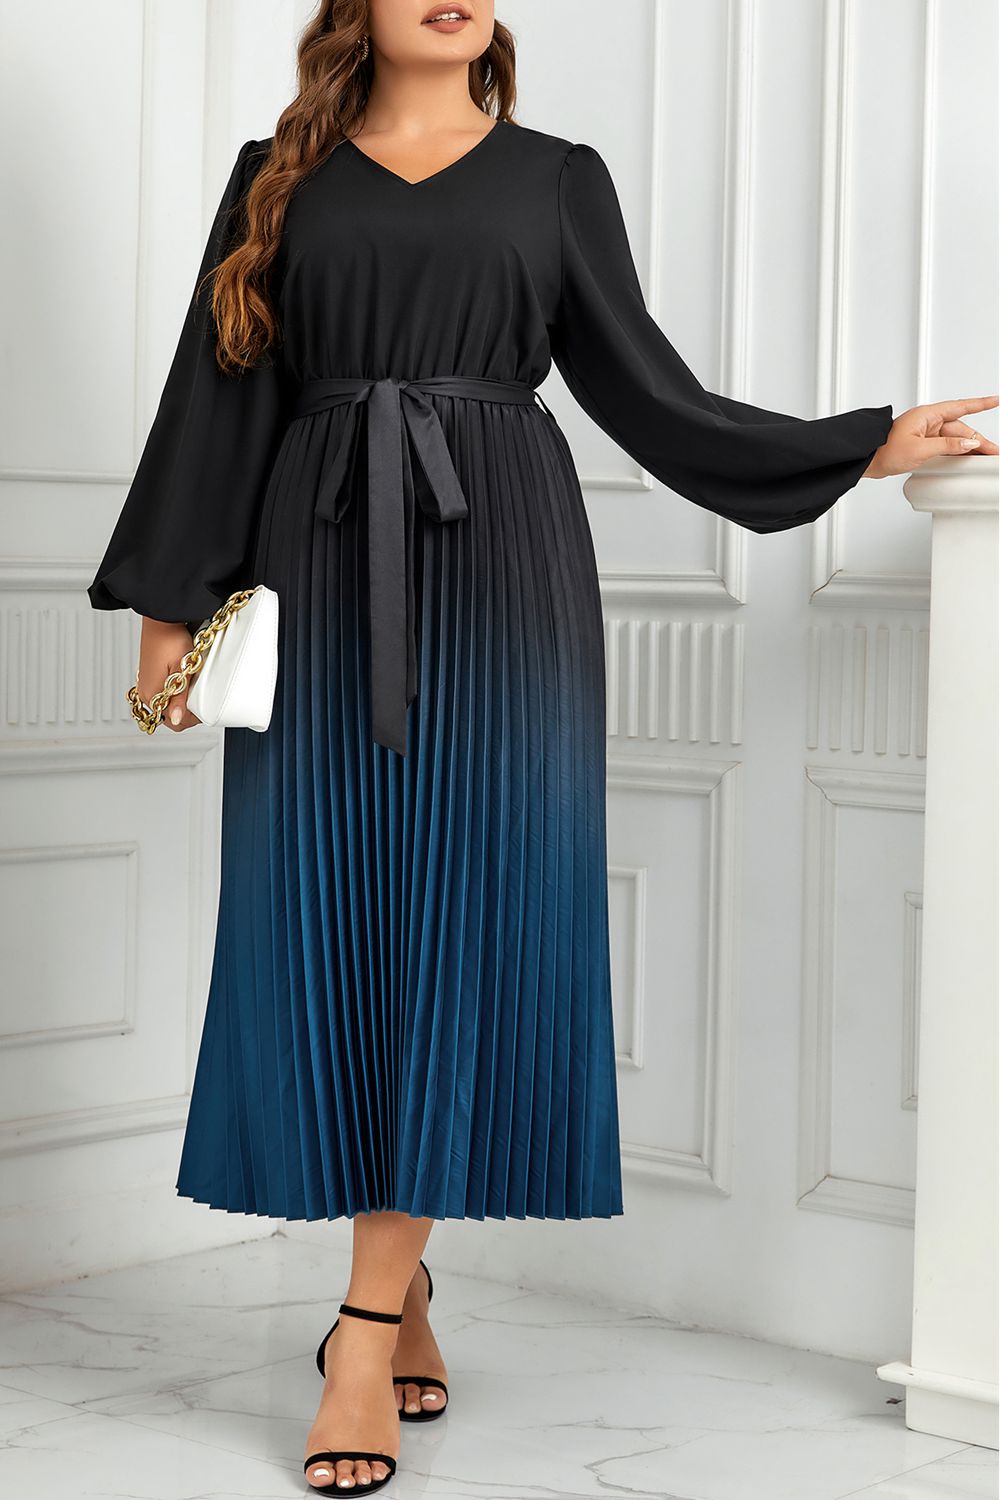 Meliza's Plus Size V-Neck Long Sleeve Pleated Tie Waist Midi Dress